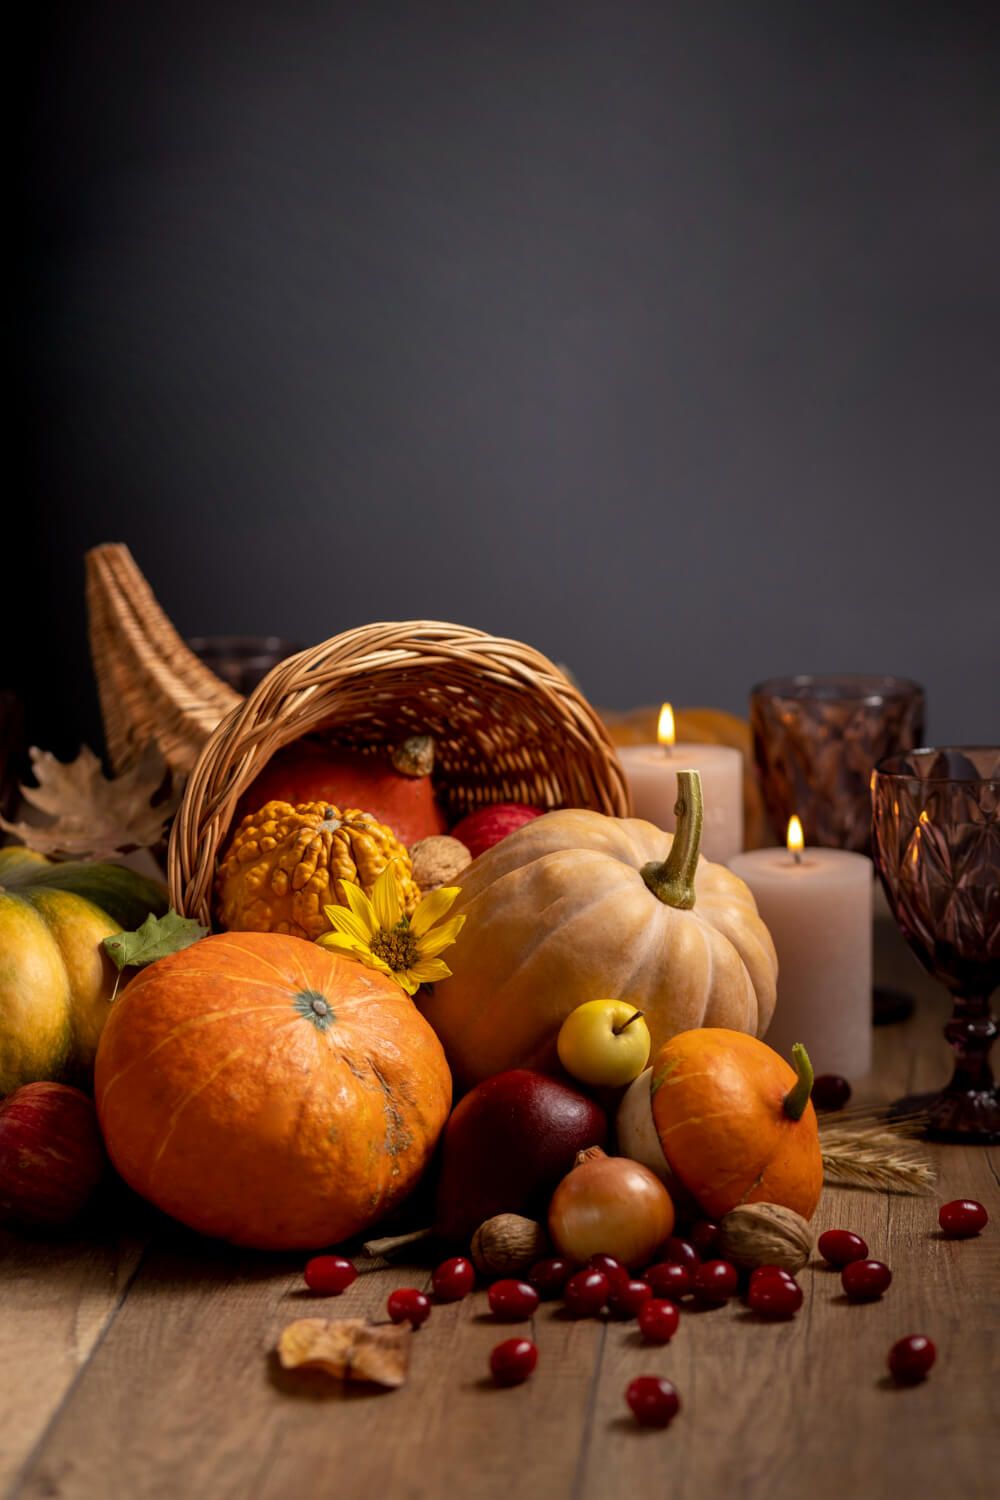 Pumpkin centered amidst autumn decor